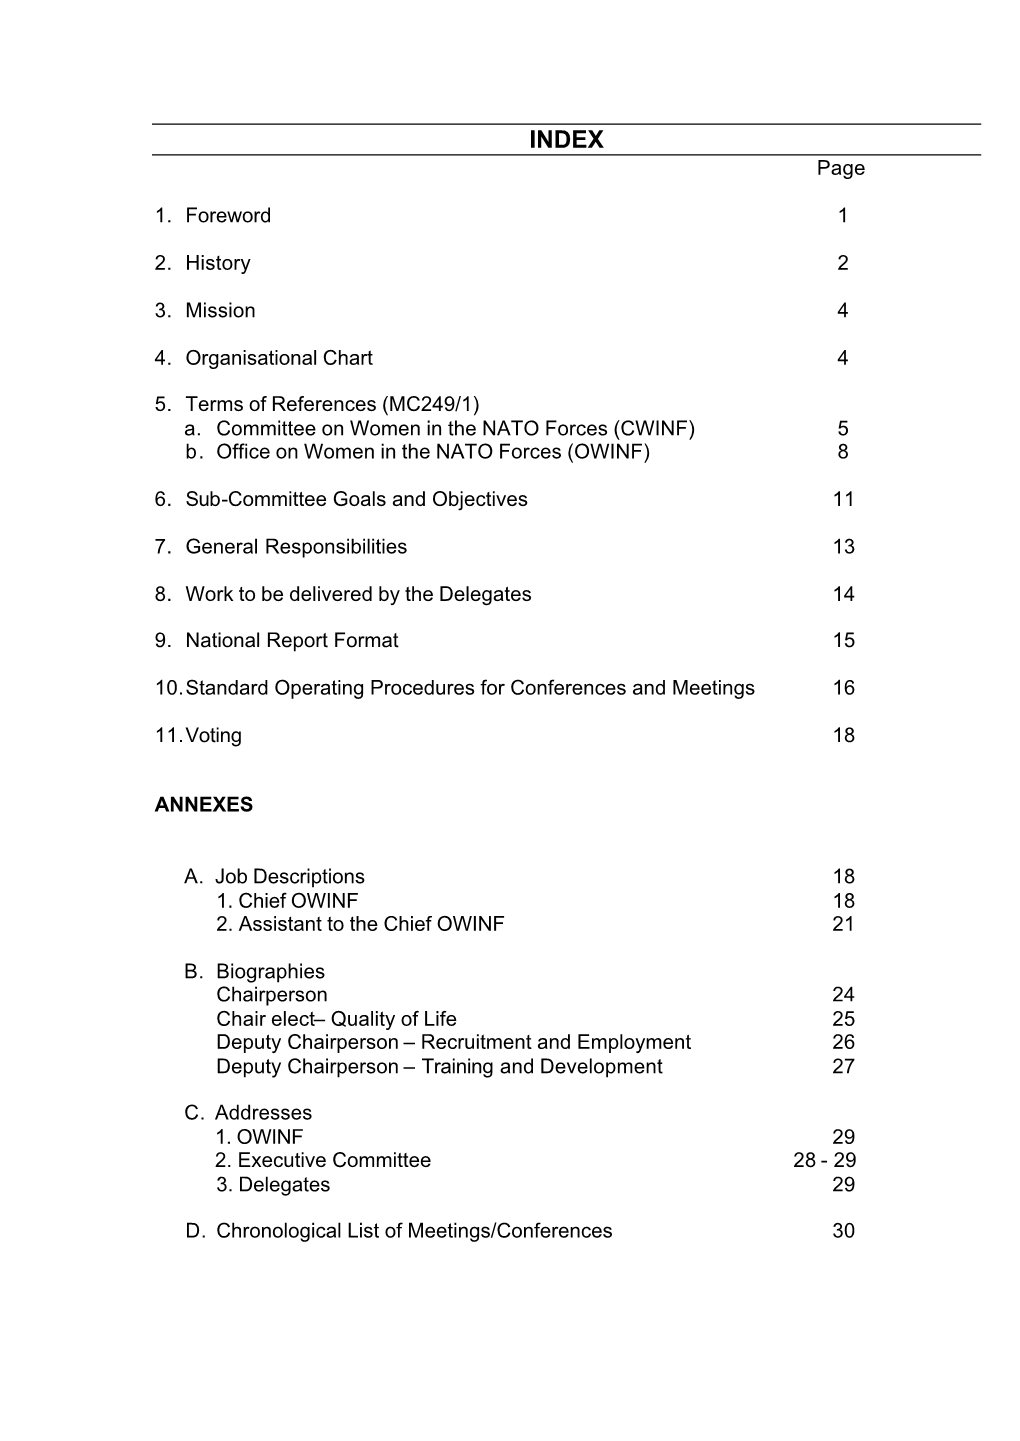 Handbook 2005